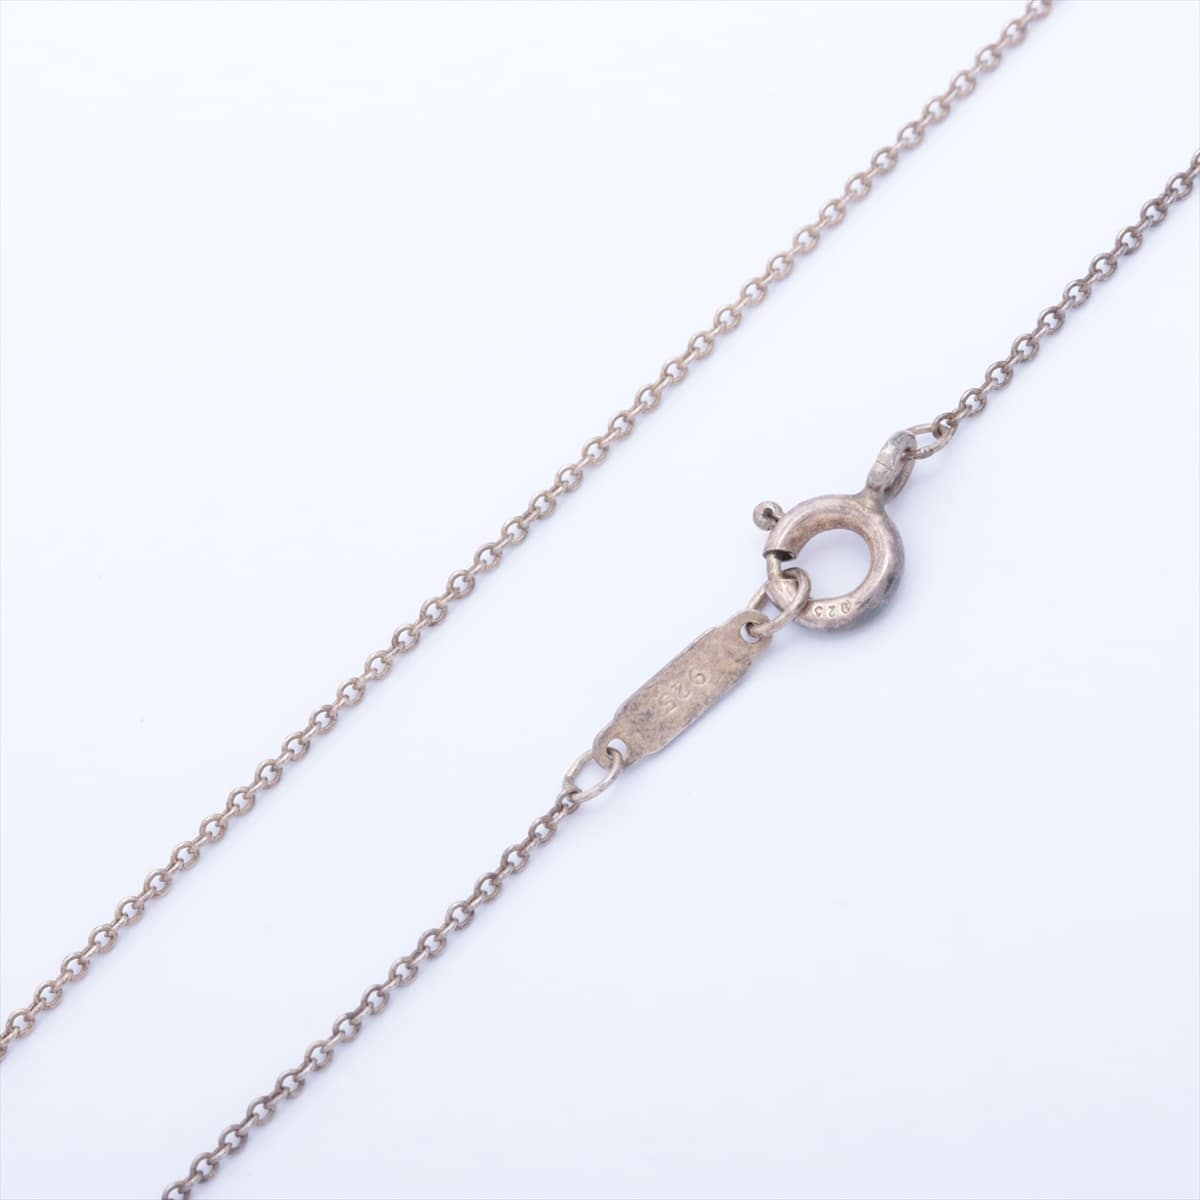 Tiffany Atlas open square Necklace 925 4.4g Silver